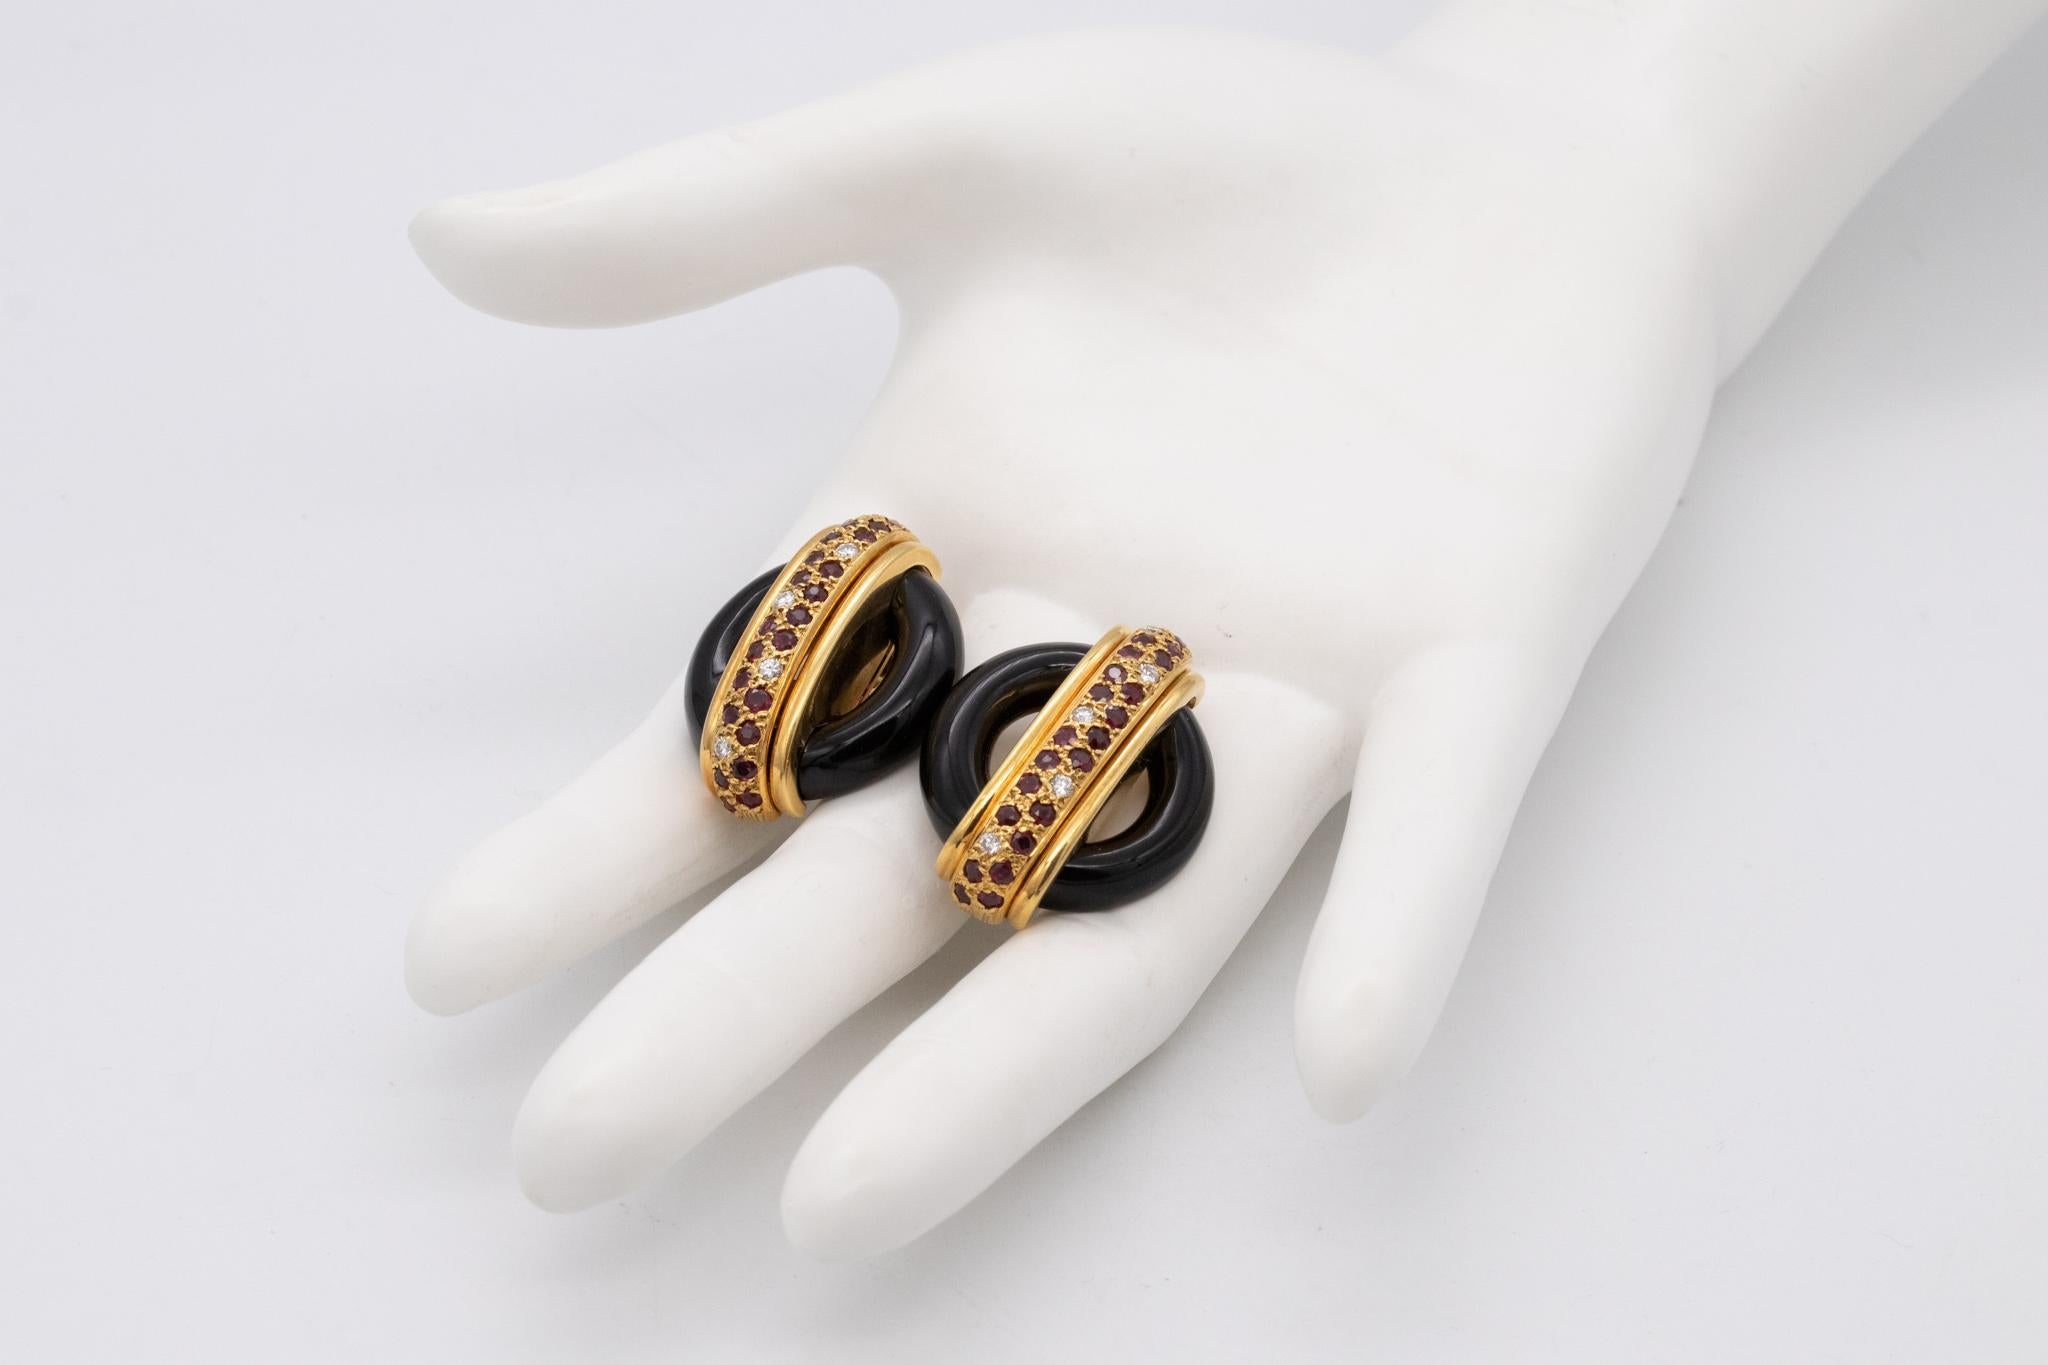 Modernist Cartier 1974 Aldo Cipullo Clip Earrings 18Kt Gold with 2.95 Ctw Diamonds Rubies